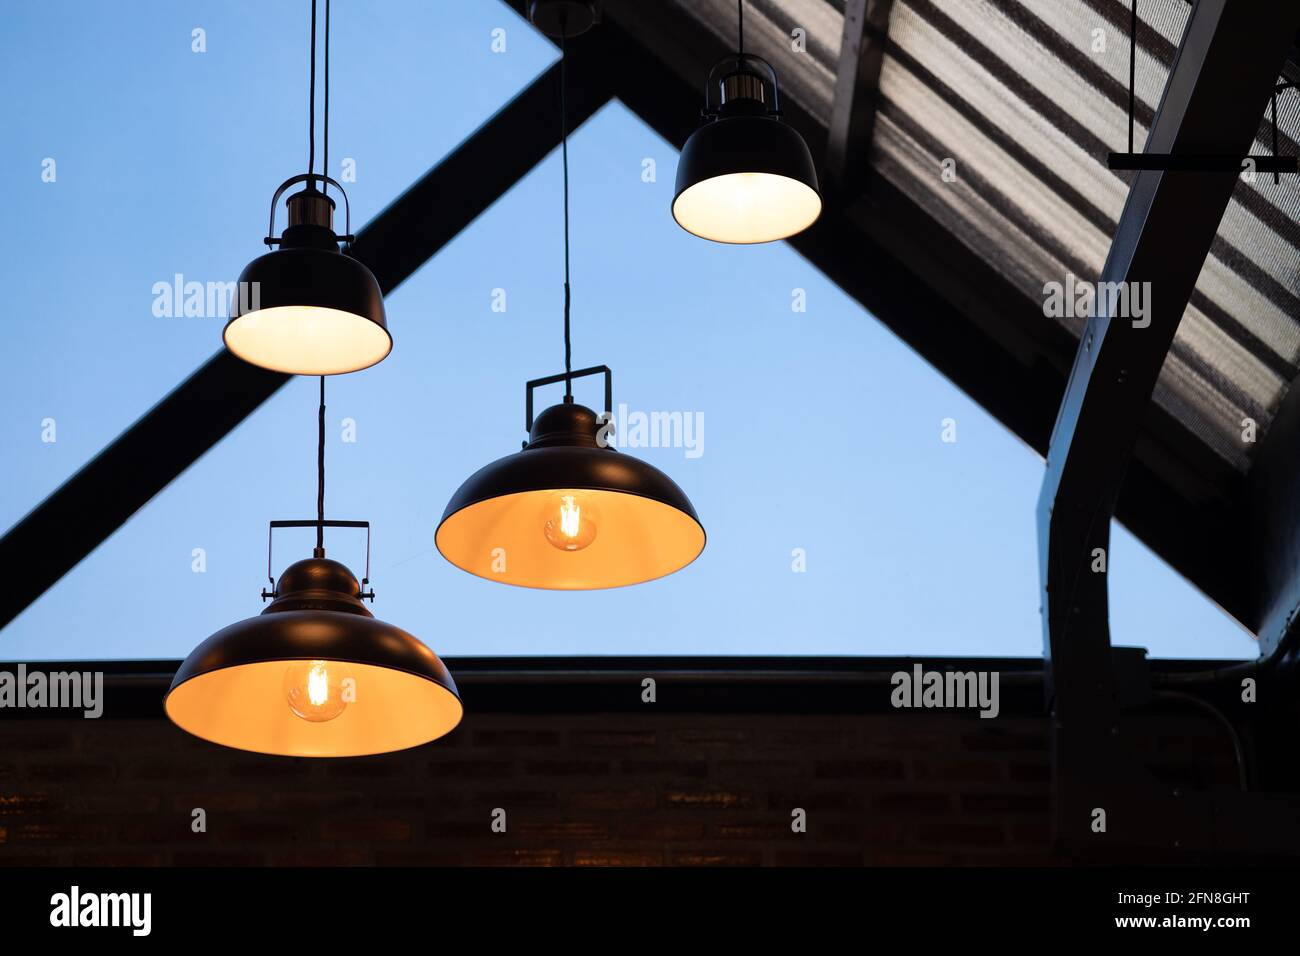 Interior lighting decoration loft home roof hanging light bulb retro vintage industrial style. Stock Photo